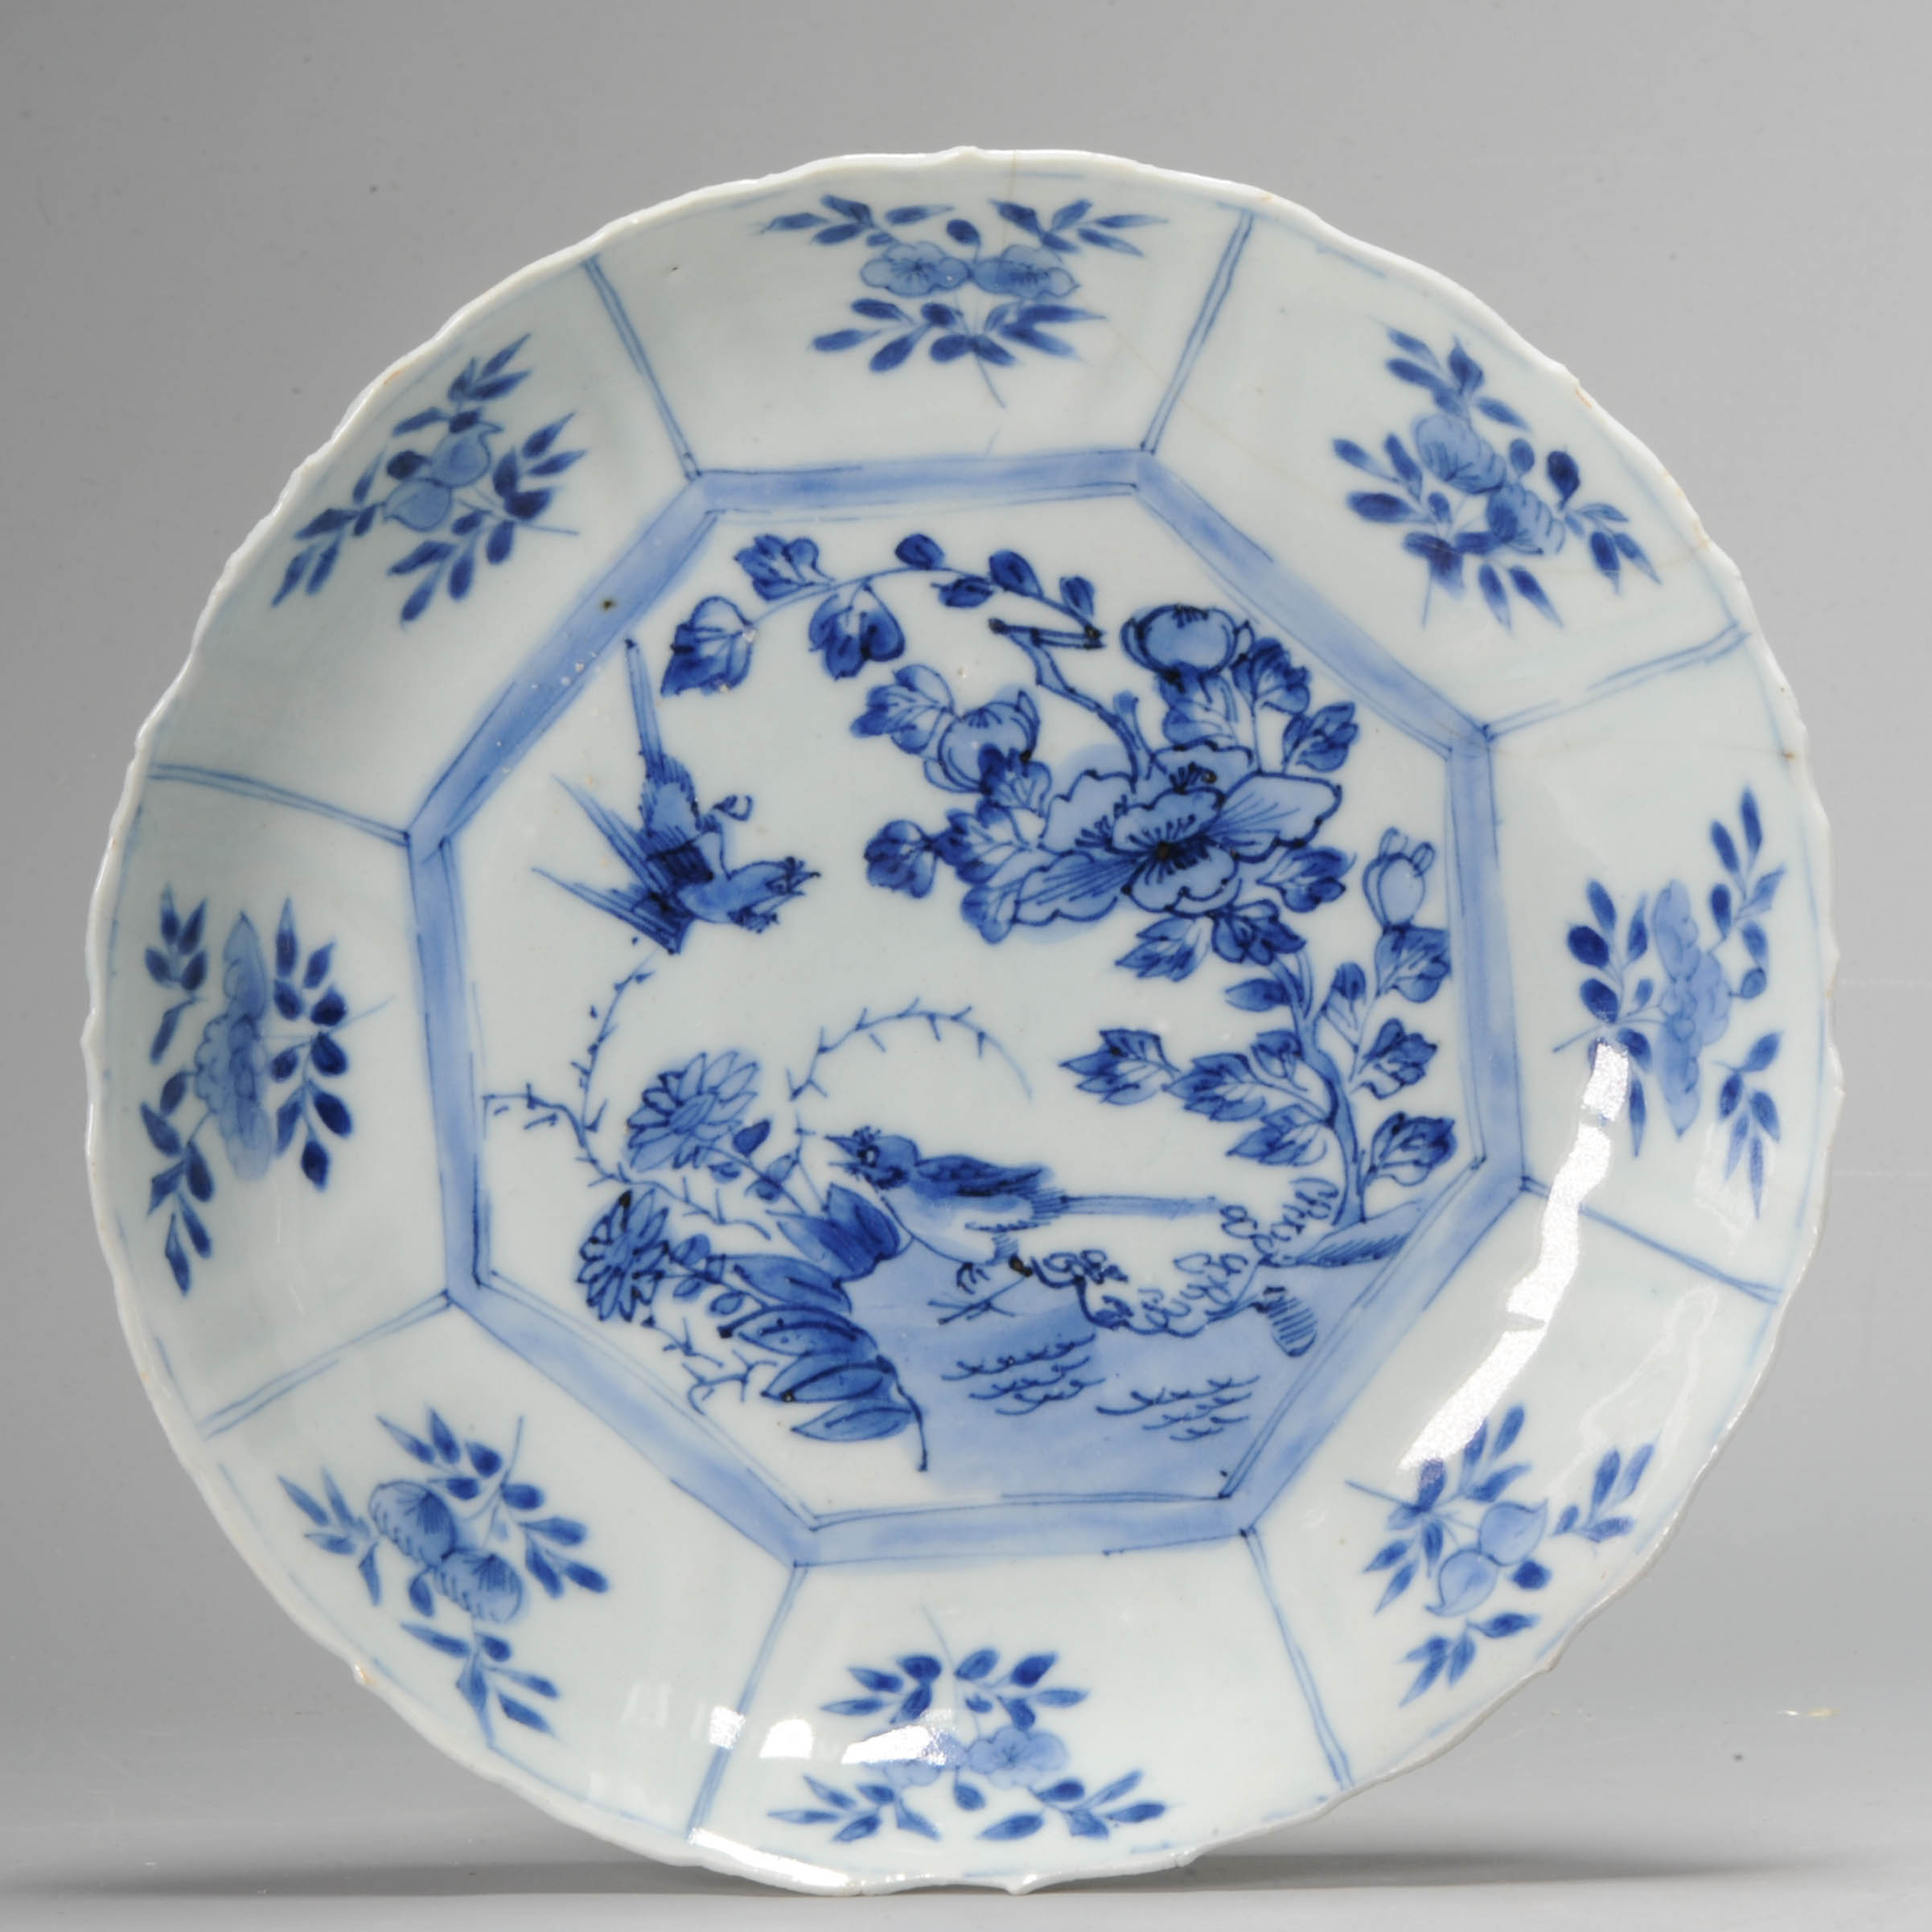 20CM Wanli 1573-1620 Antique Chinese Porcelain Kraak Dish Plate Birds Flowers